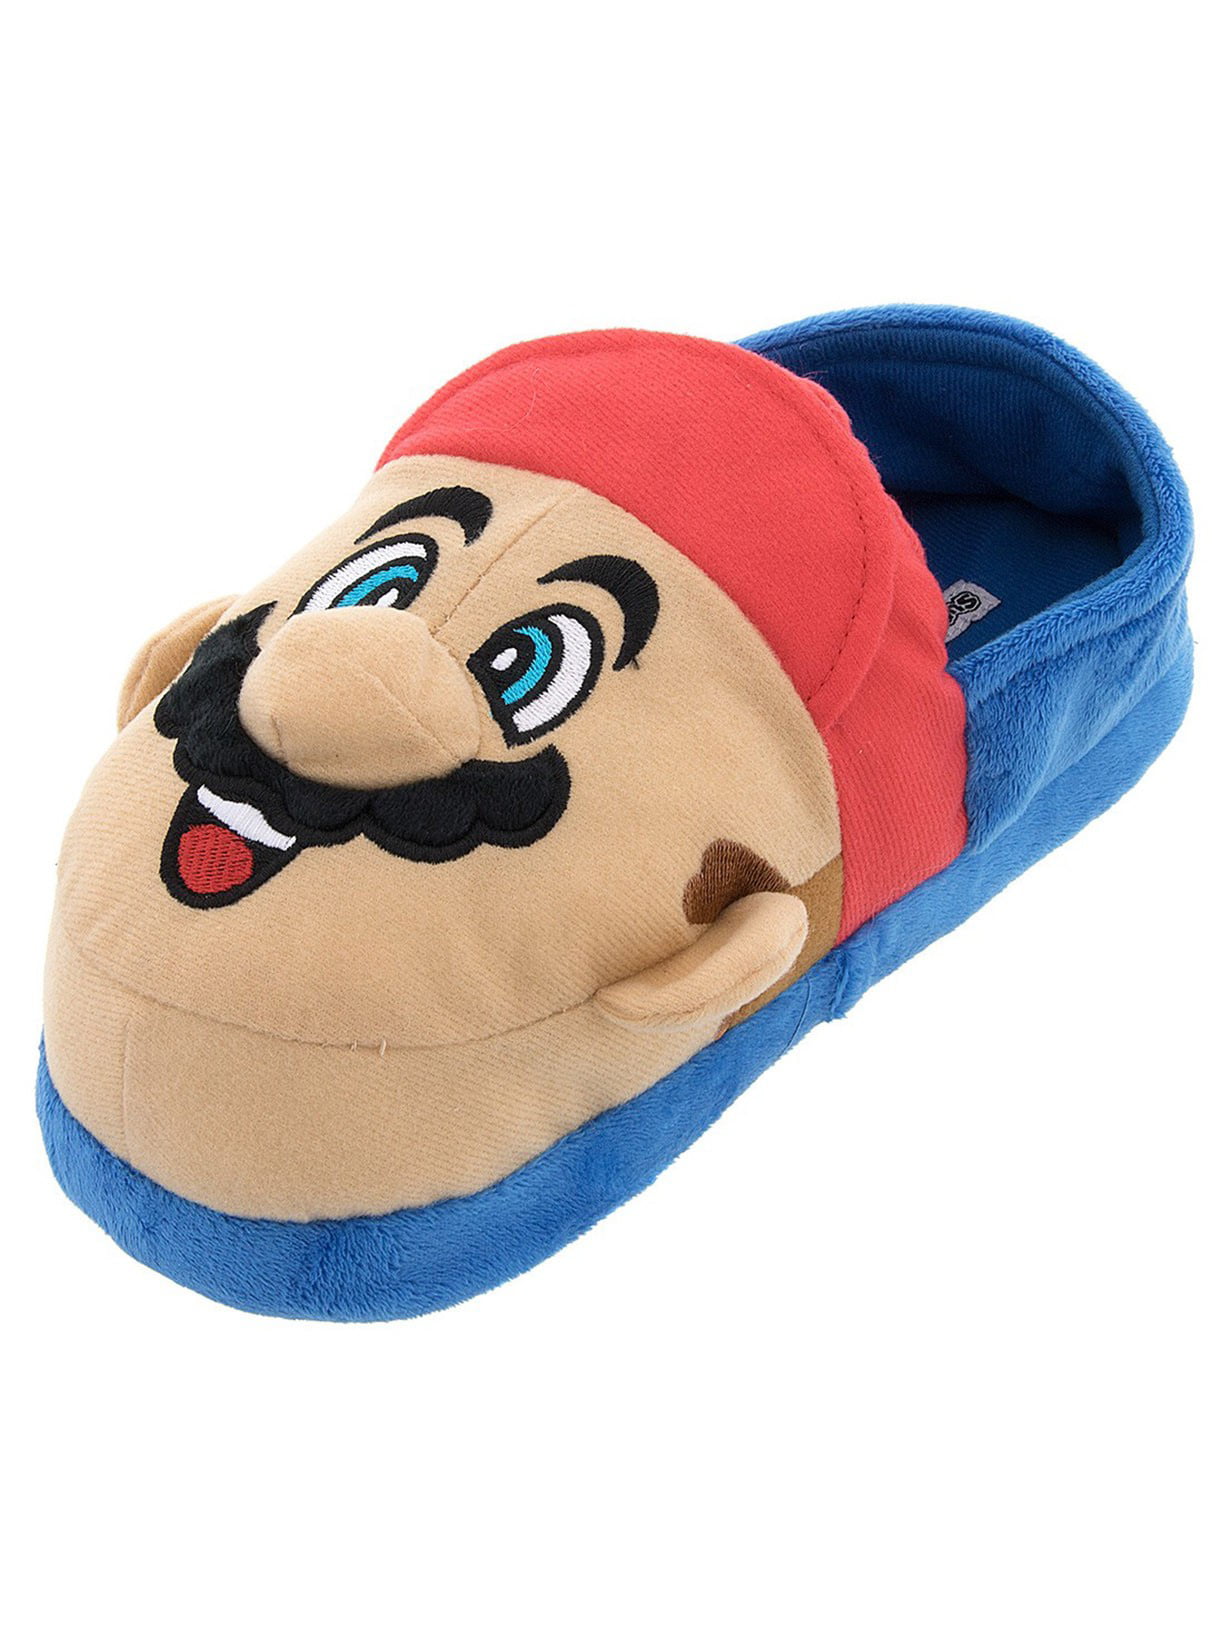 walmart childrens slippers